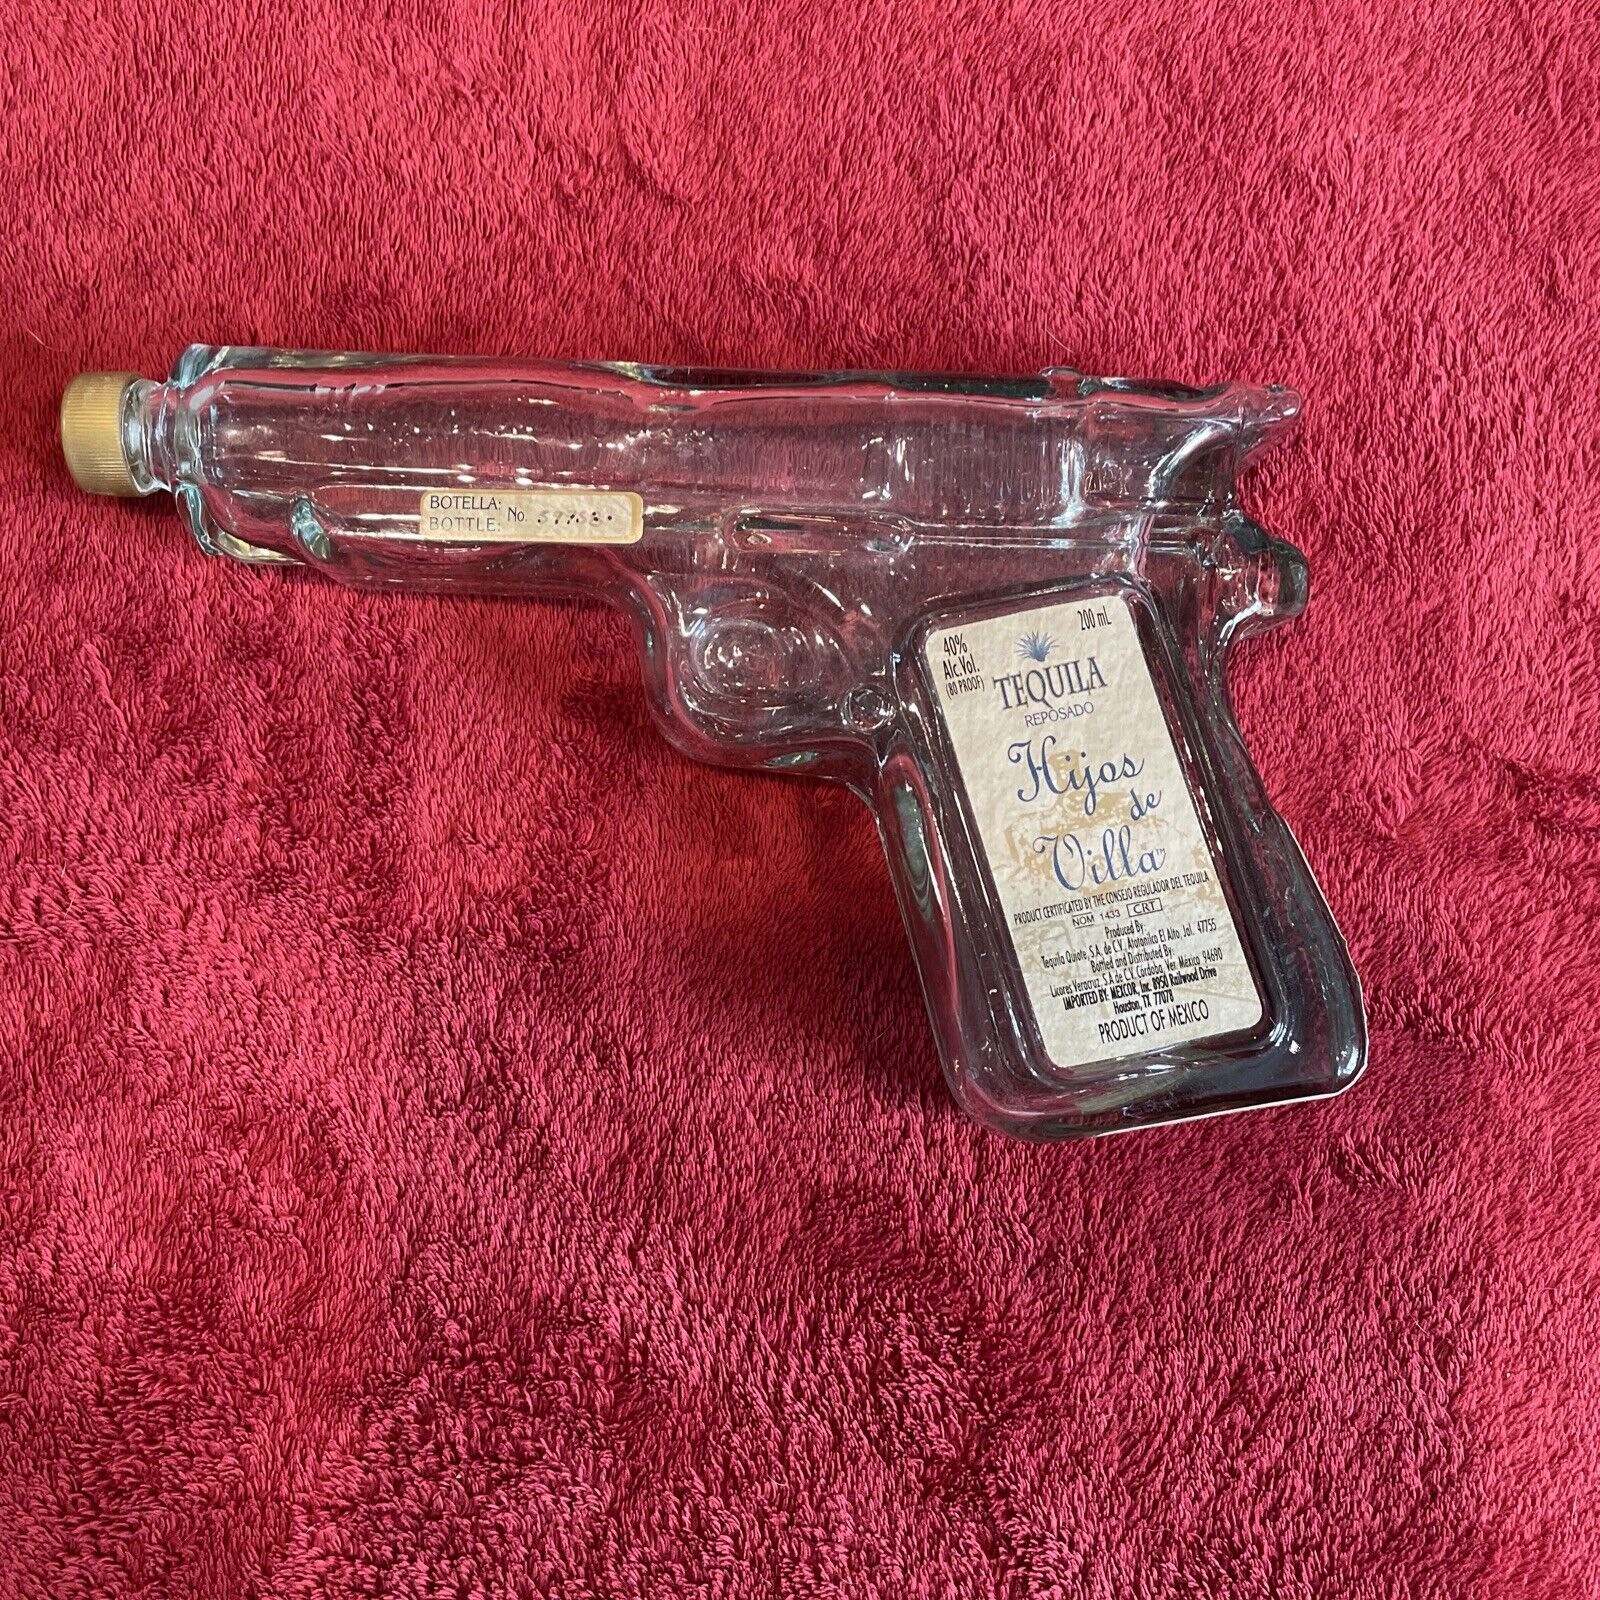 HIJOS de VILLA Tequila Empty Bottle (Gun Shaped) Limited Numbered #59,758  200ml